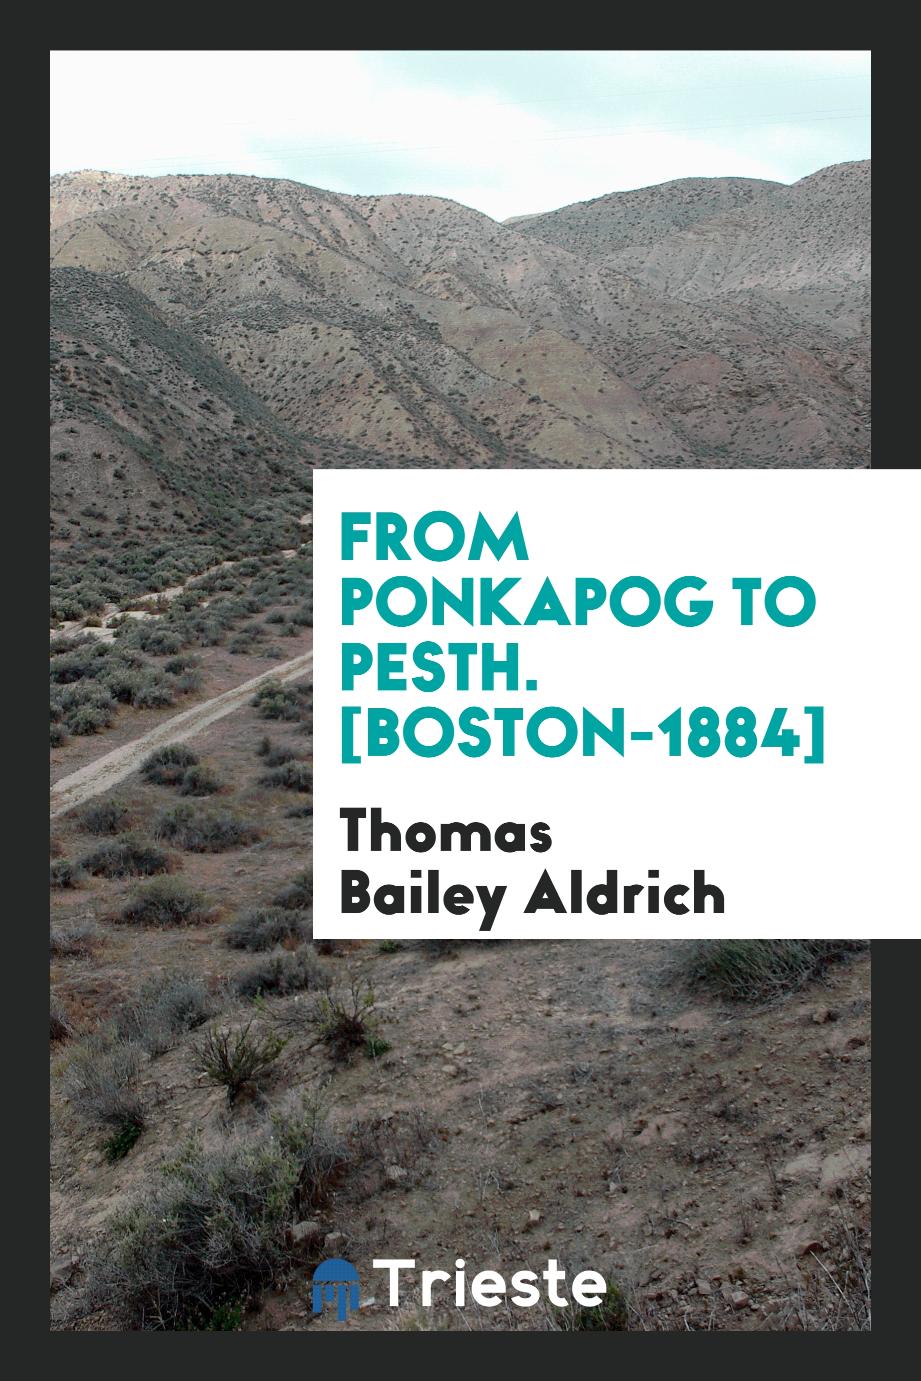 From Ponkapog to Pesth. [Boston-1884]